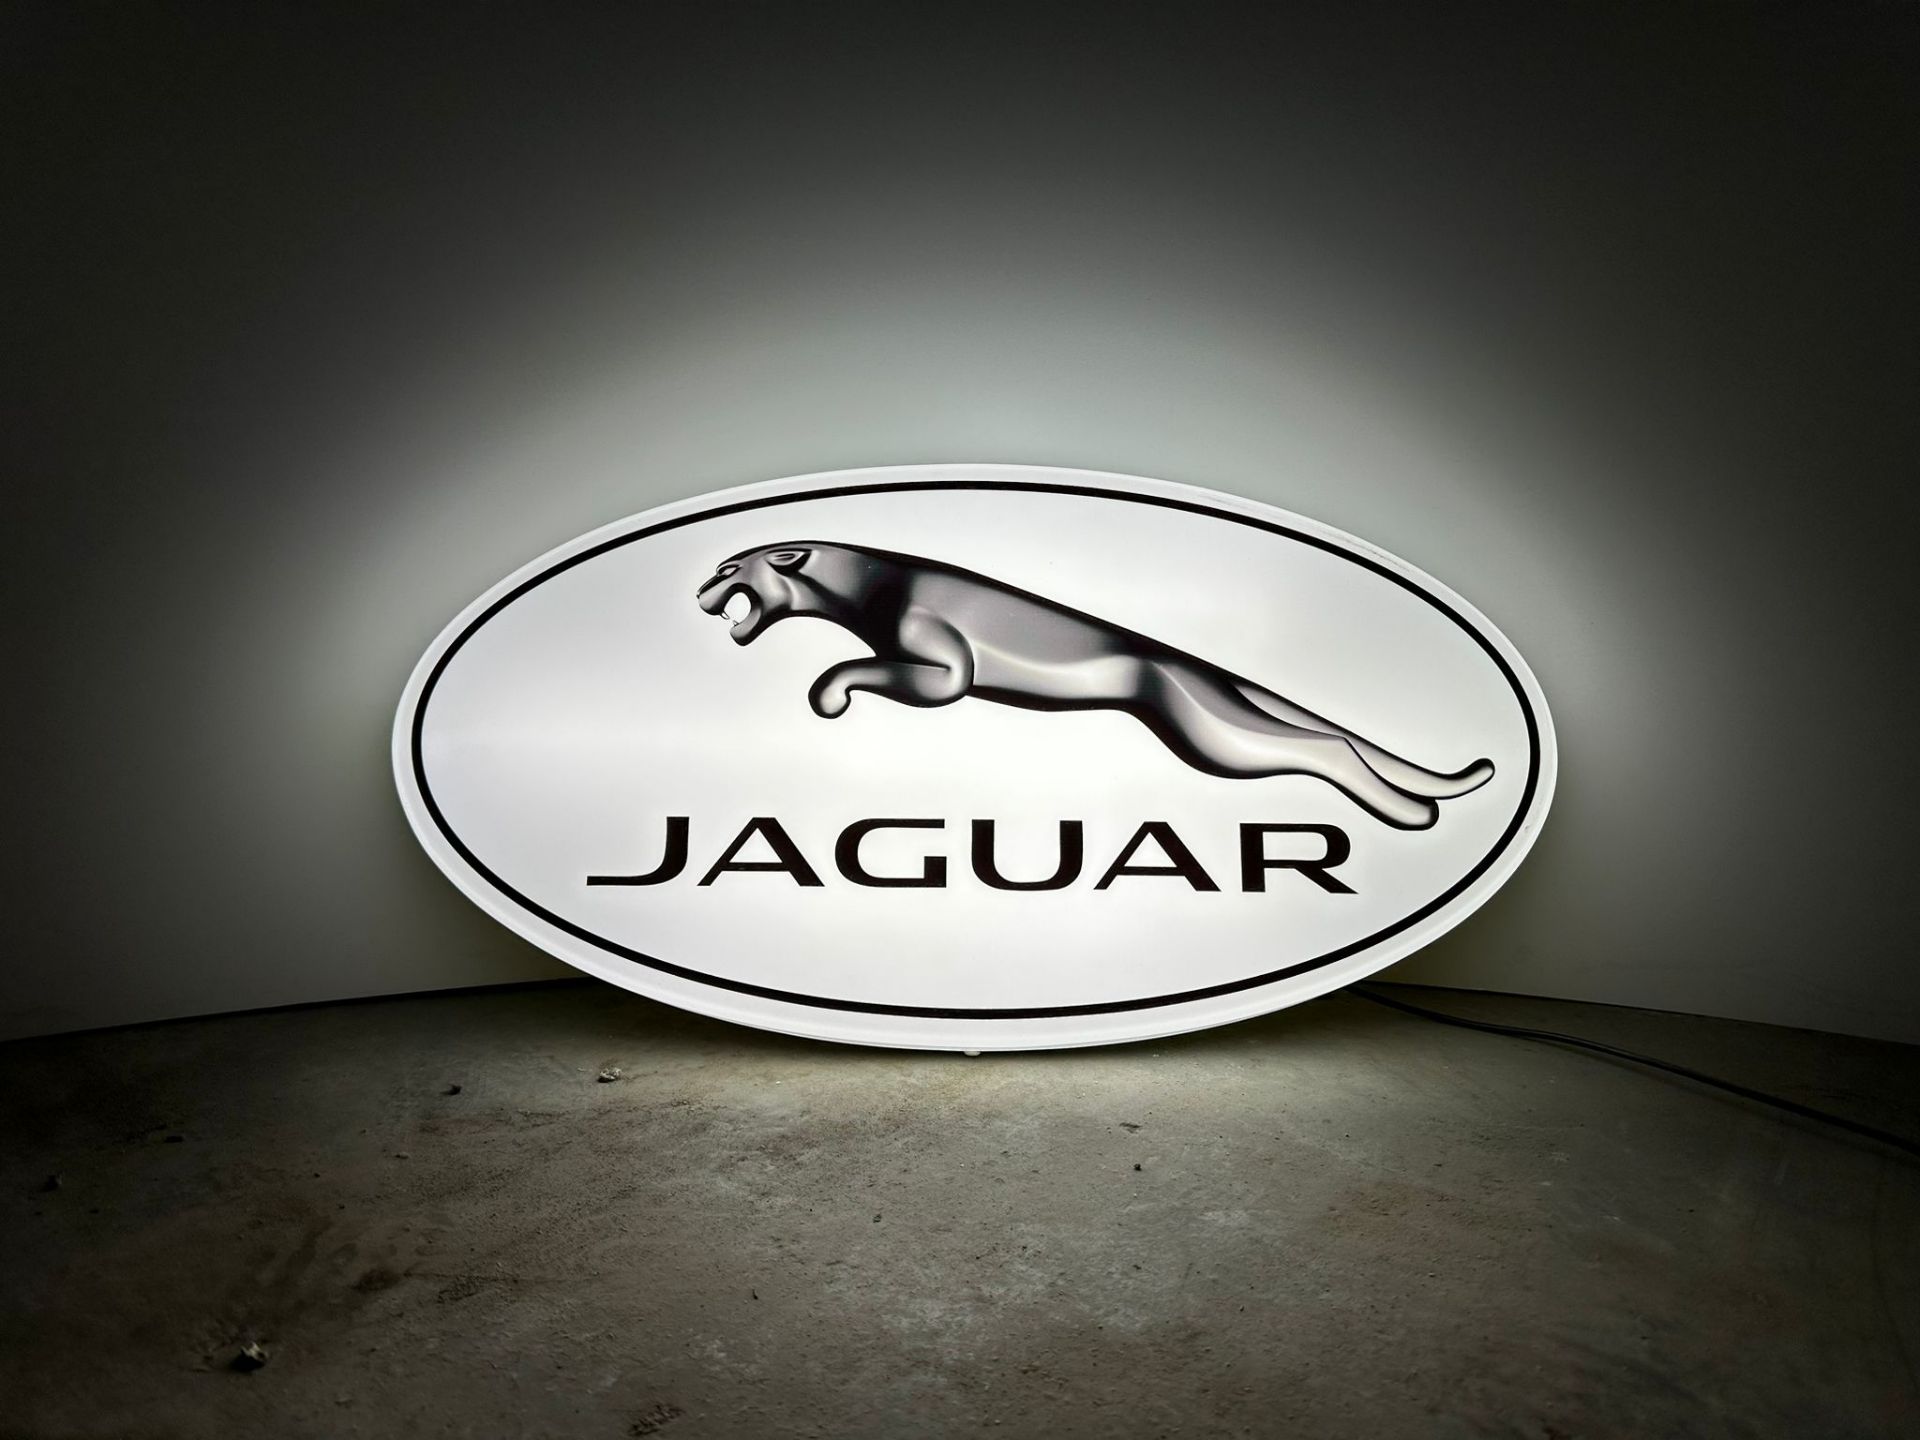 jaguar sign illuminated - Image 3 of 4